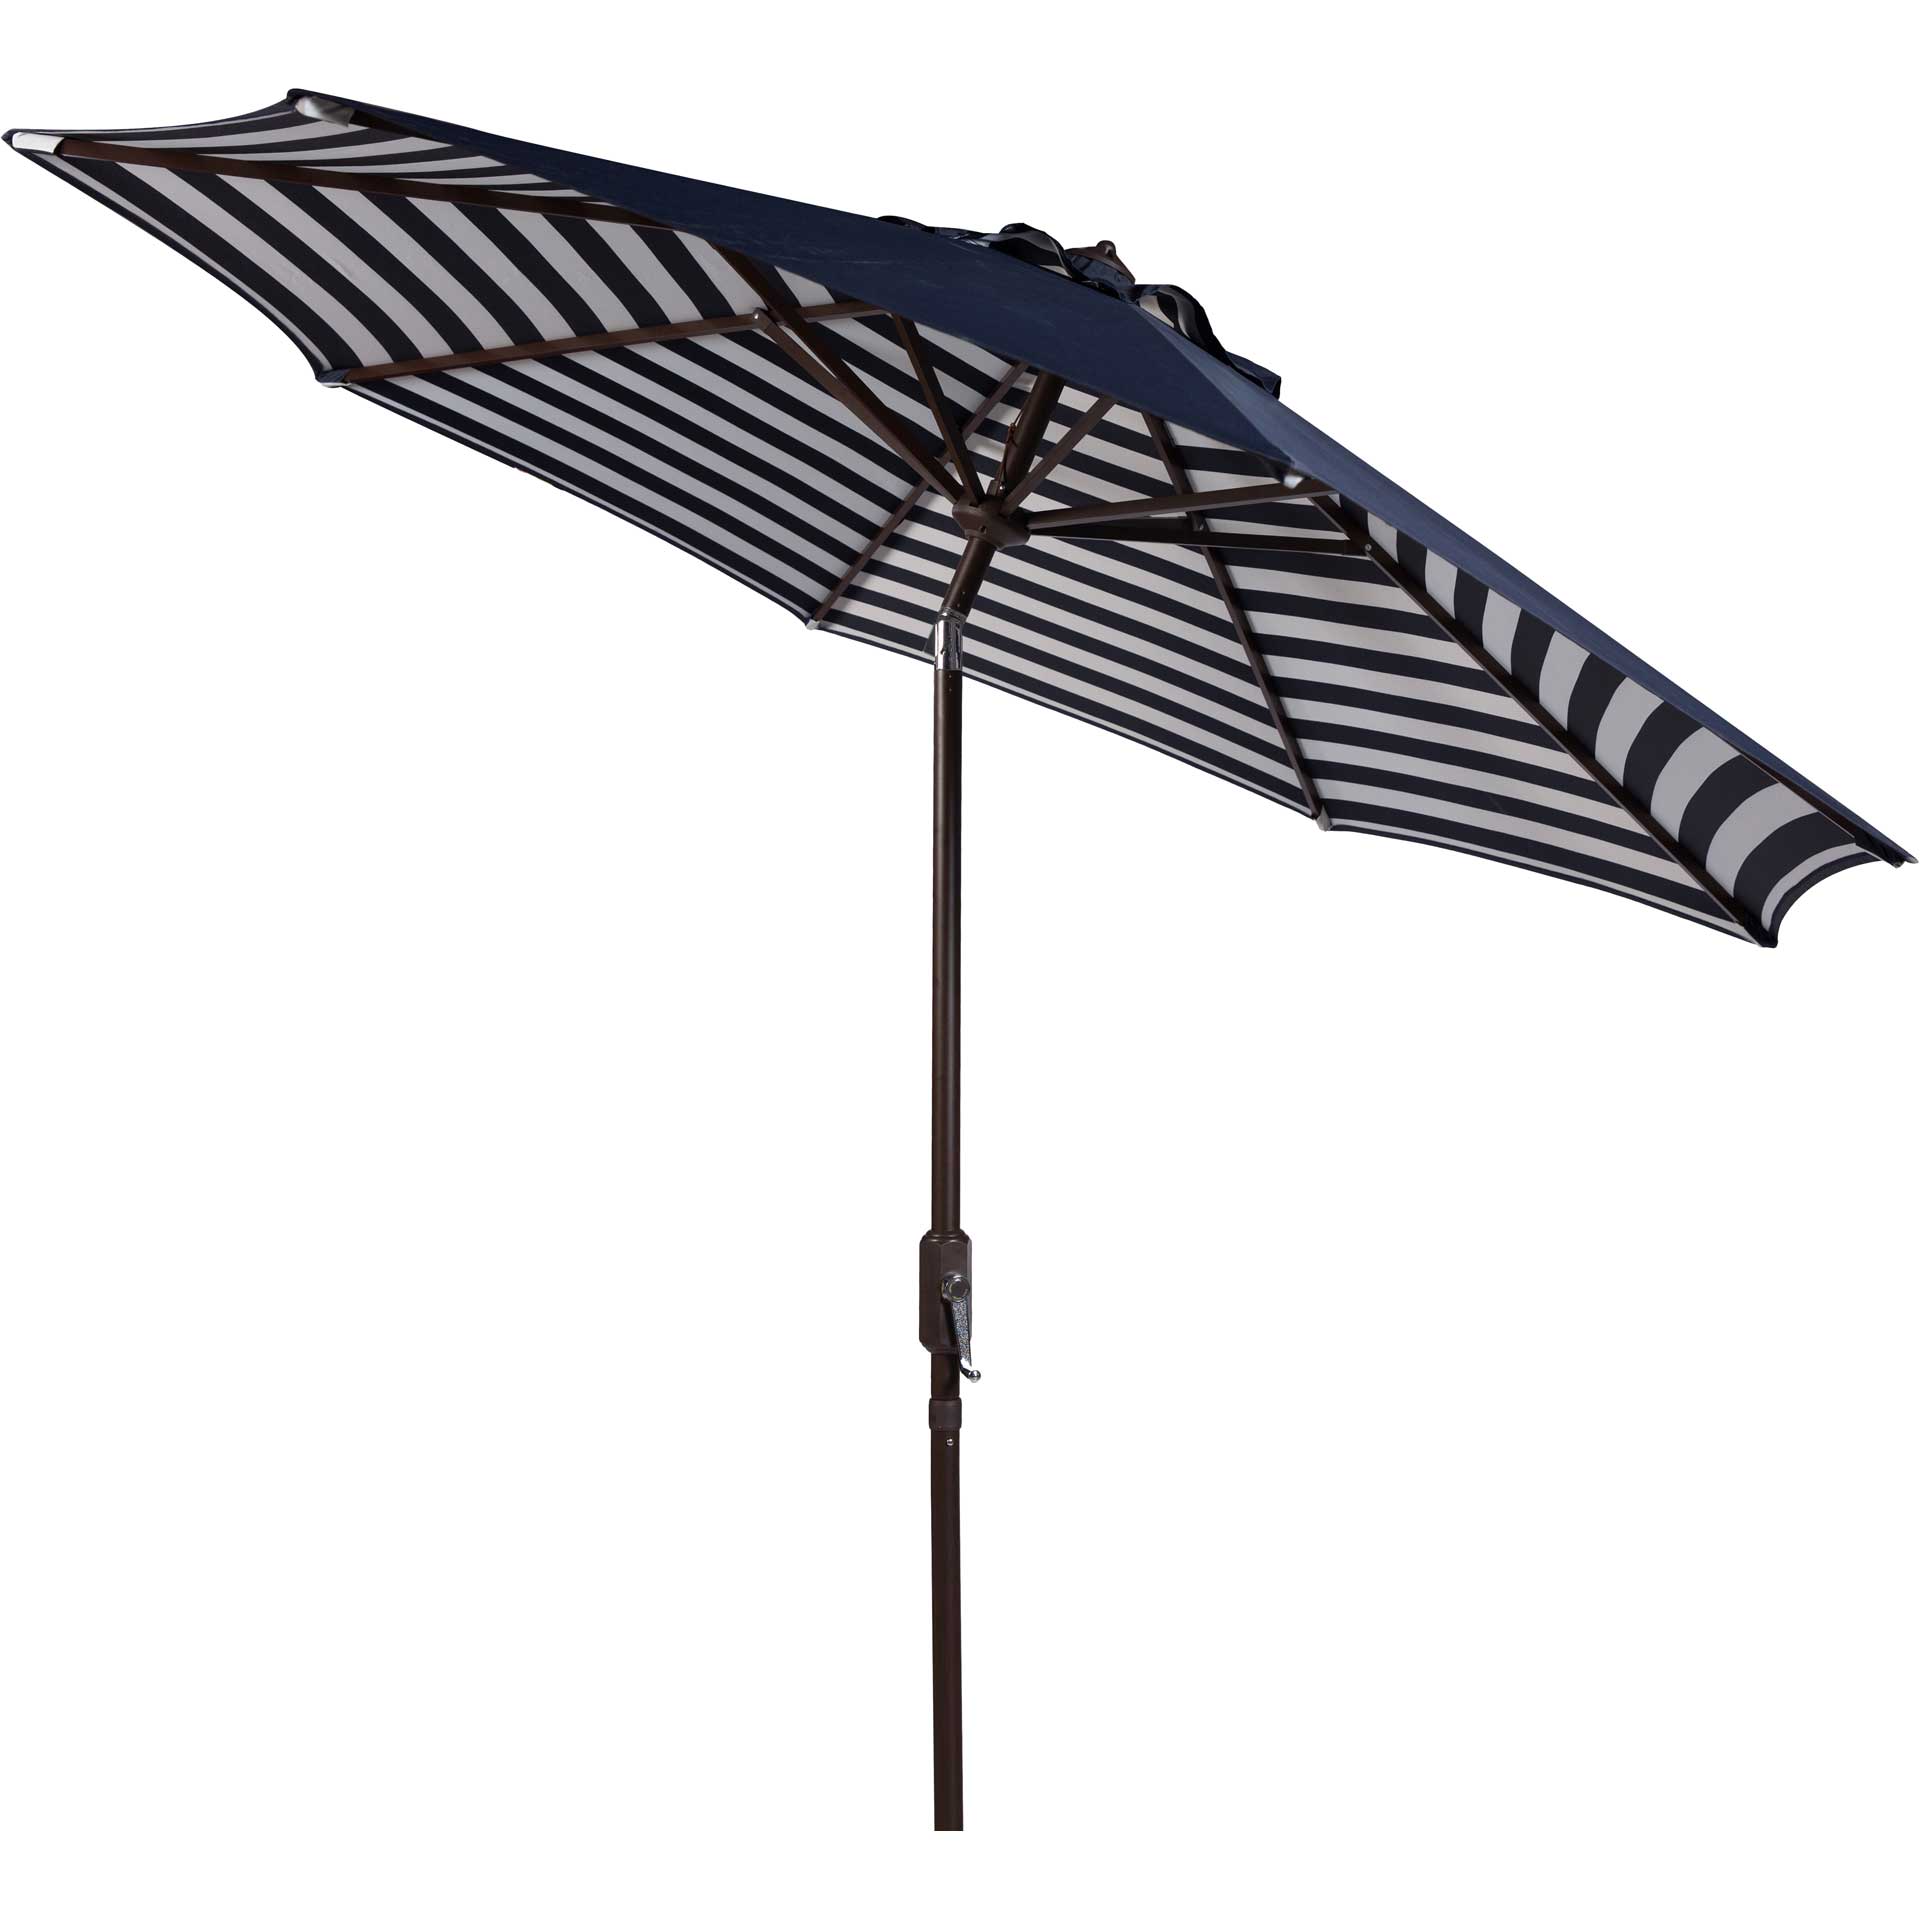 Atara Striped Outdoor Auto Tilt Umbrella Navy/White